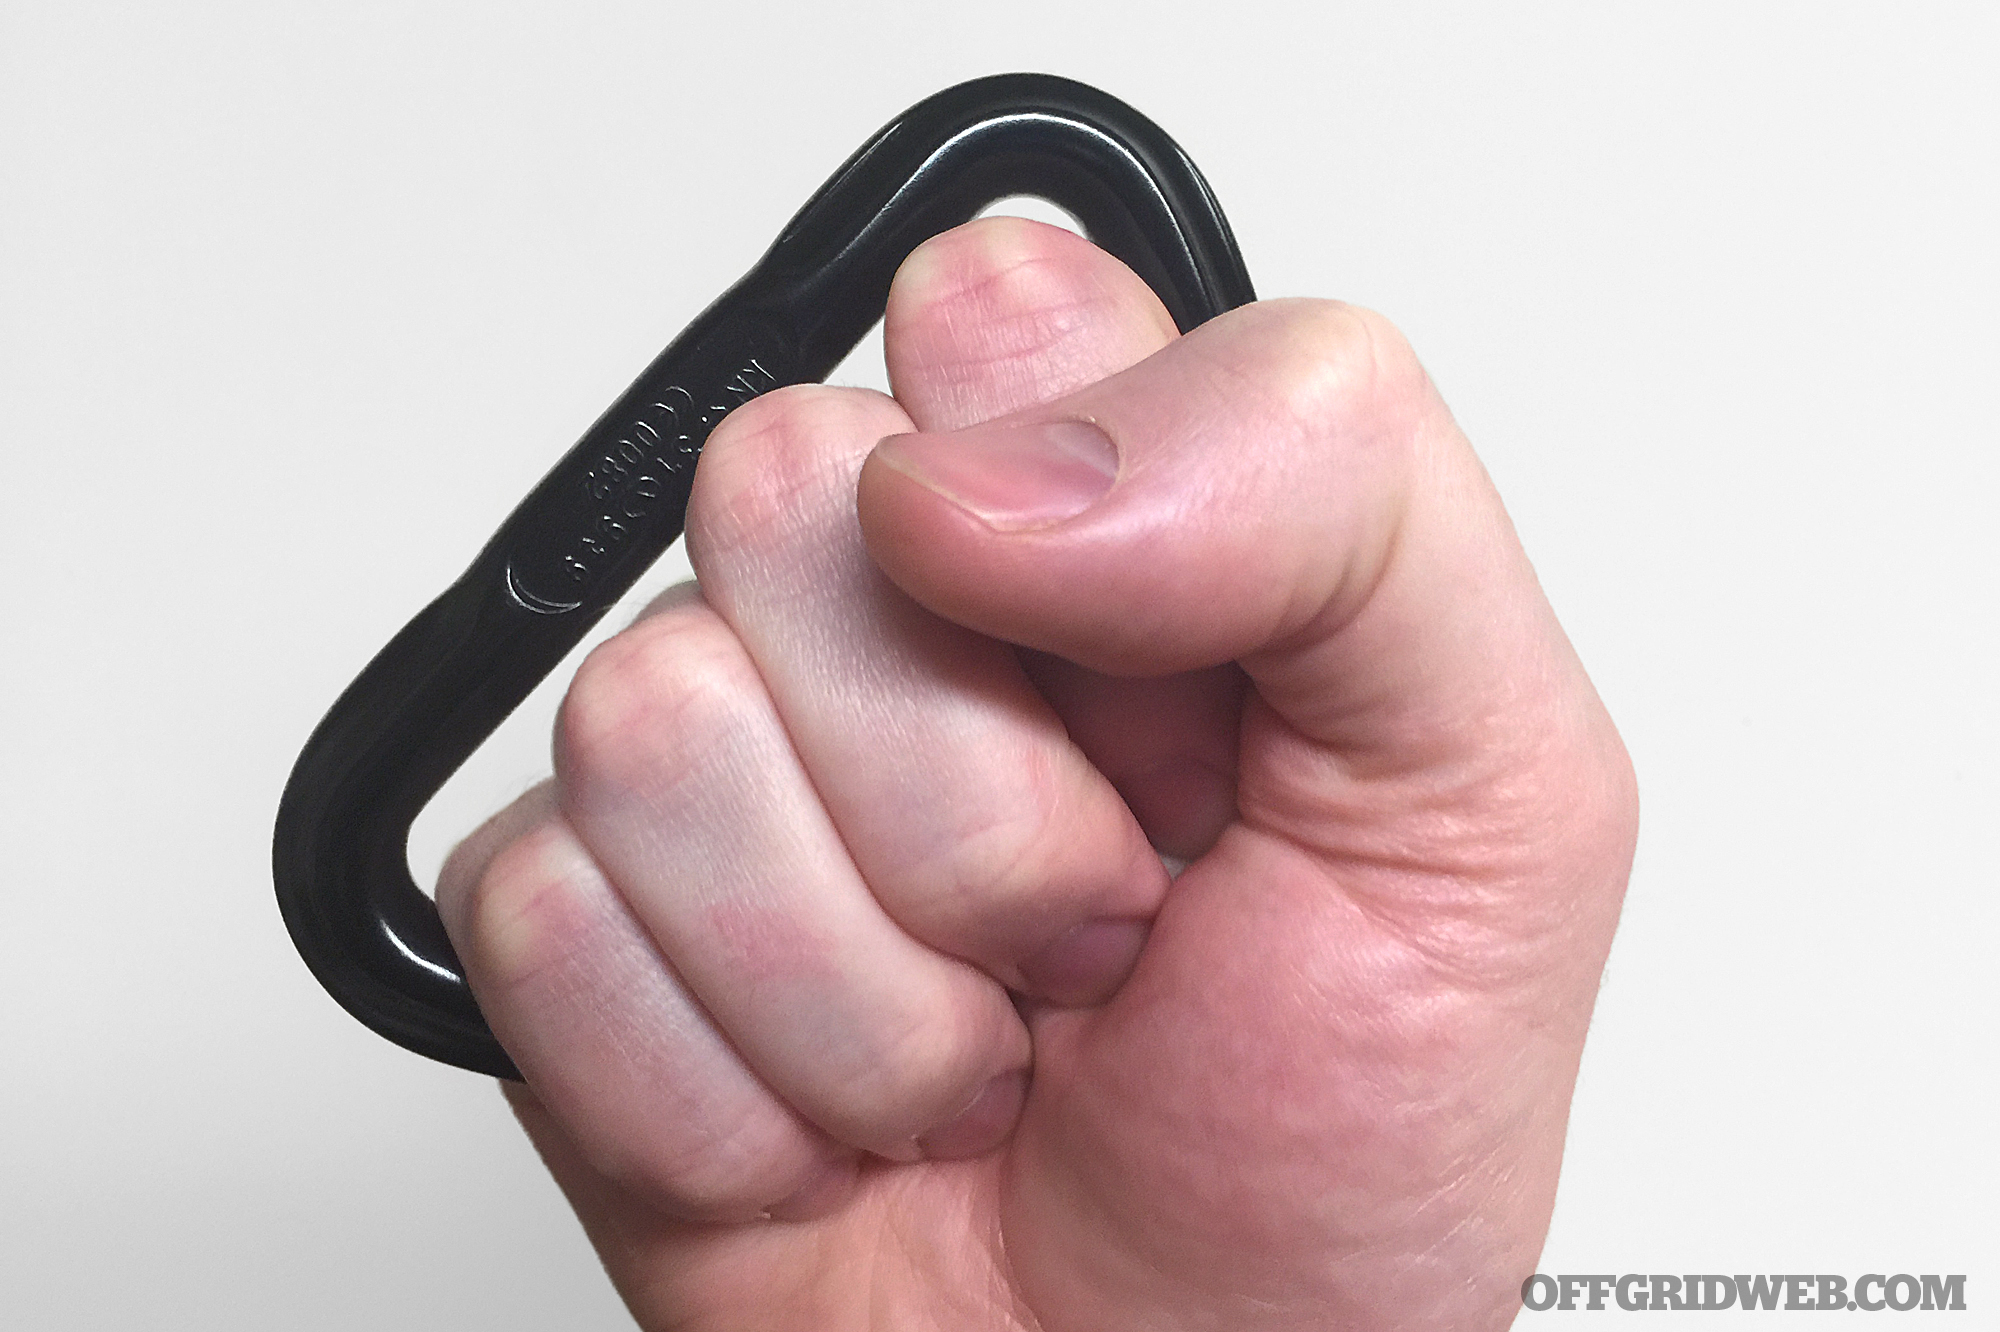 Carabiner Knuckles: A Unique Self-Defense Tool